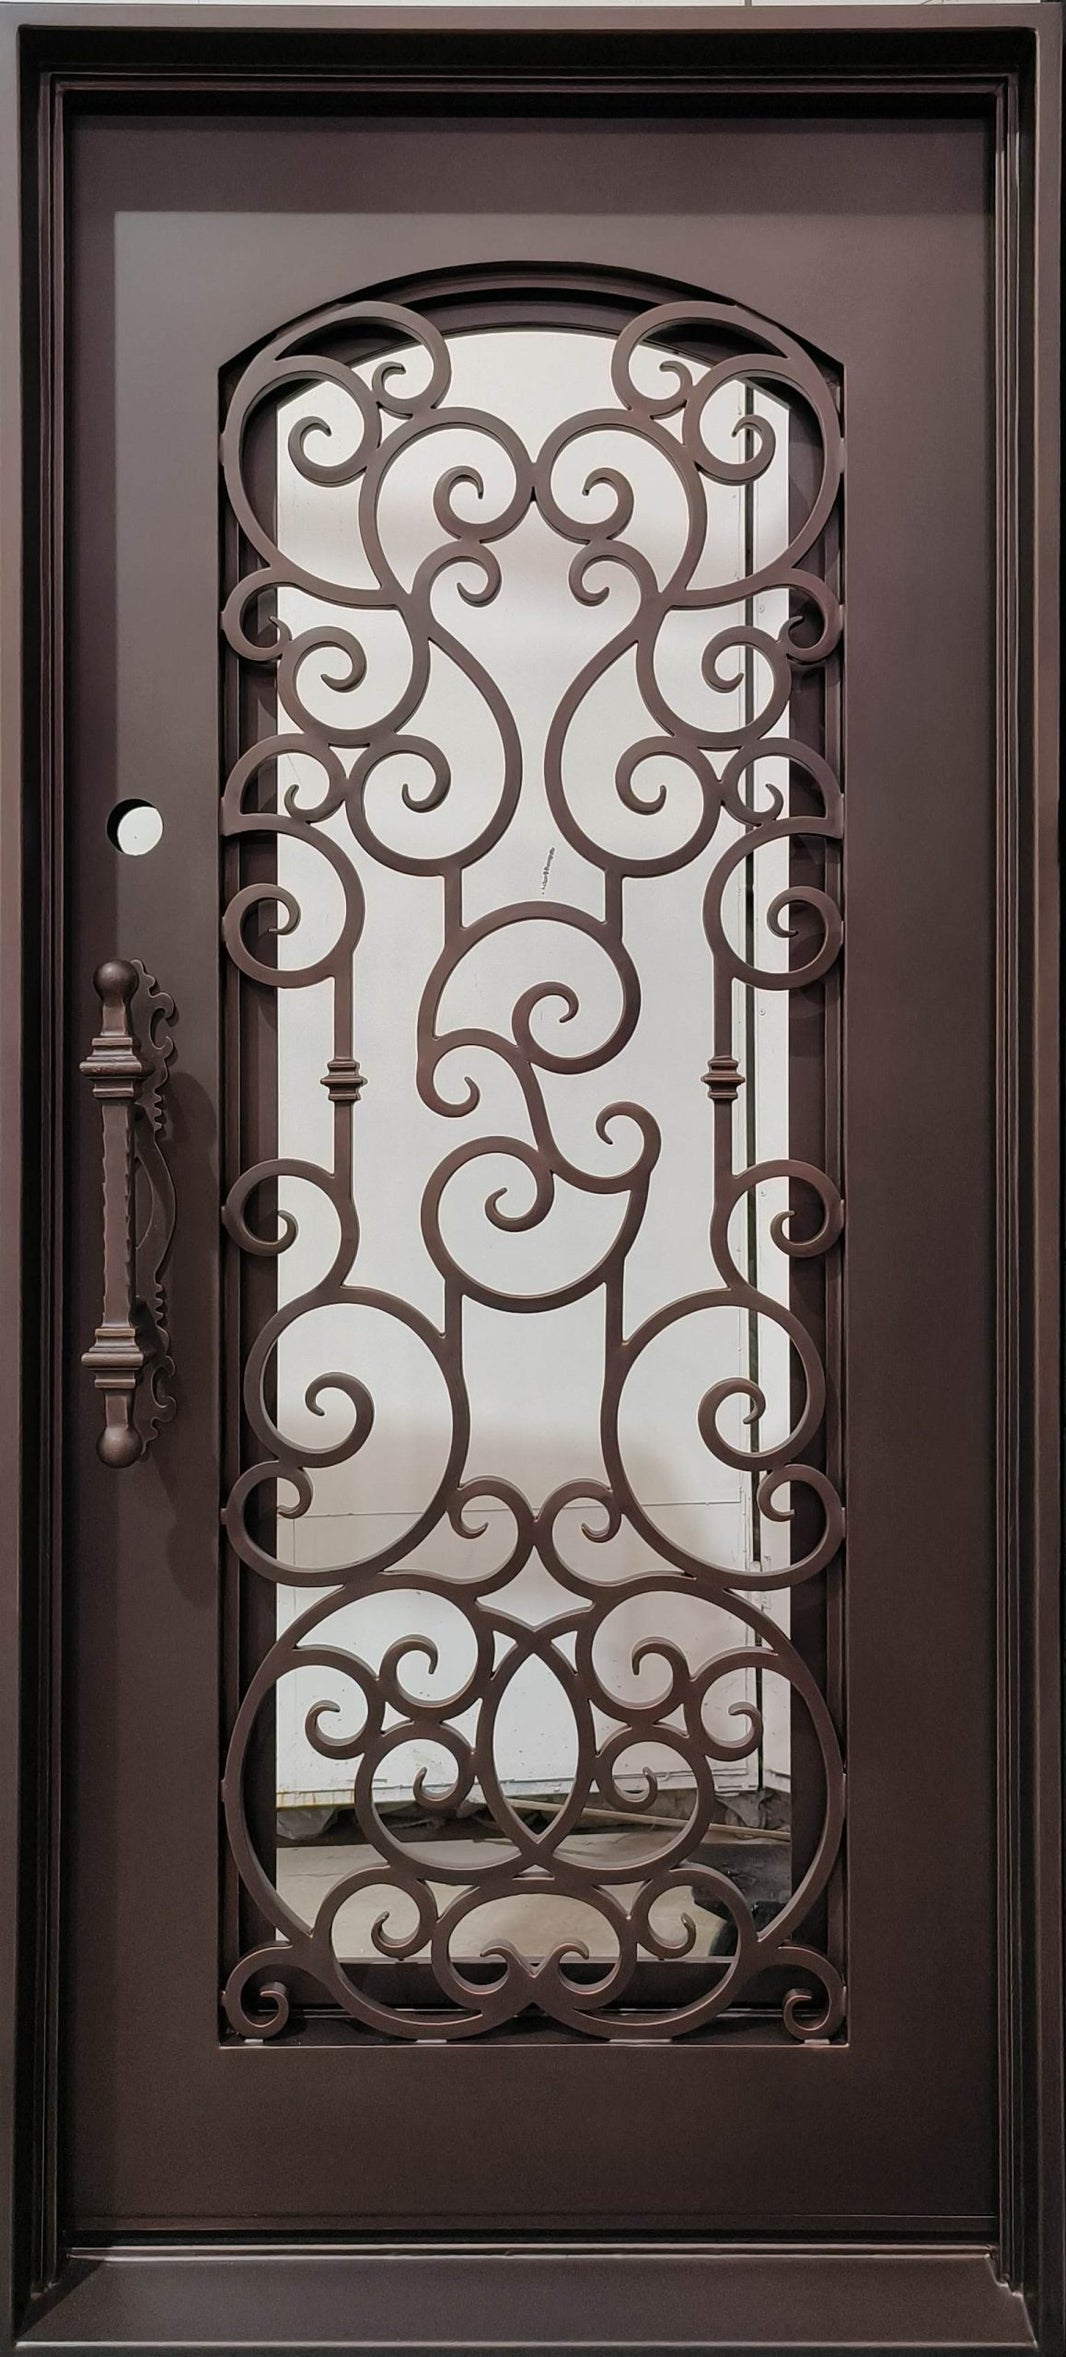 Classic Iron design Door | Square Top With kickplate | Model # IWD 928